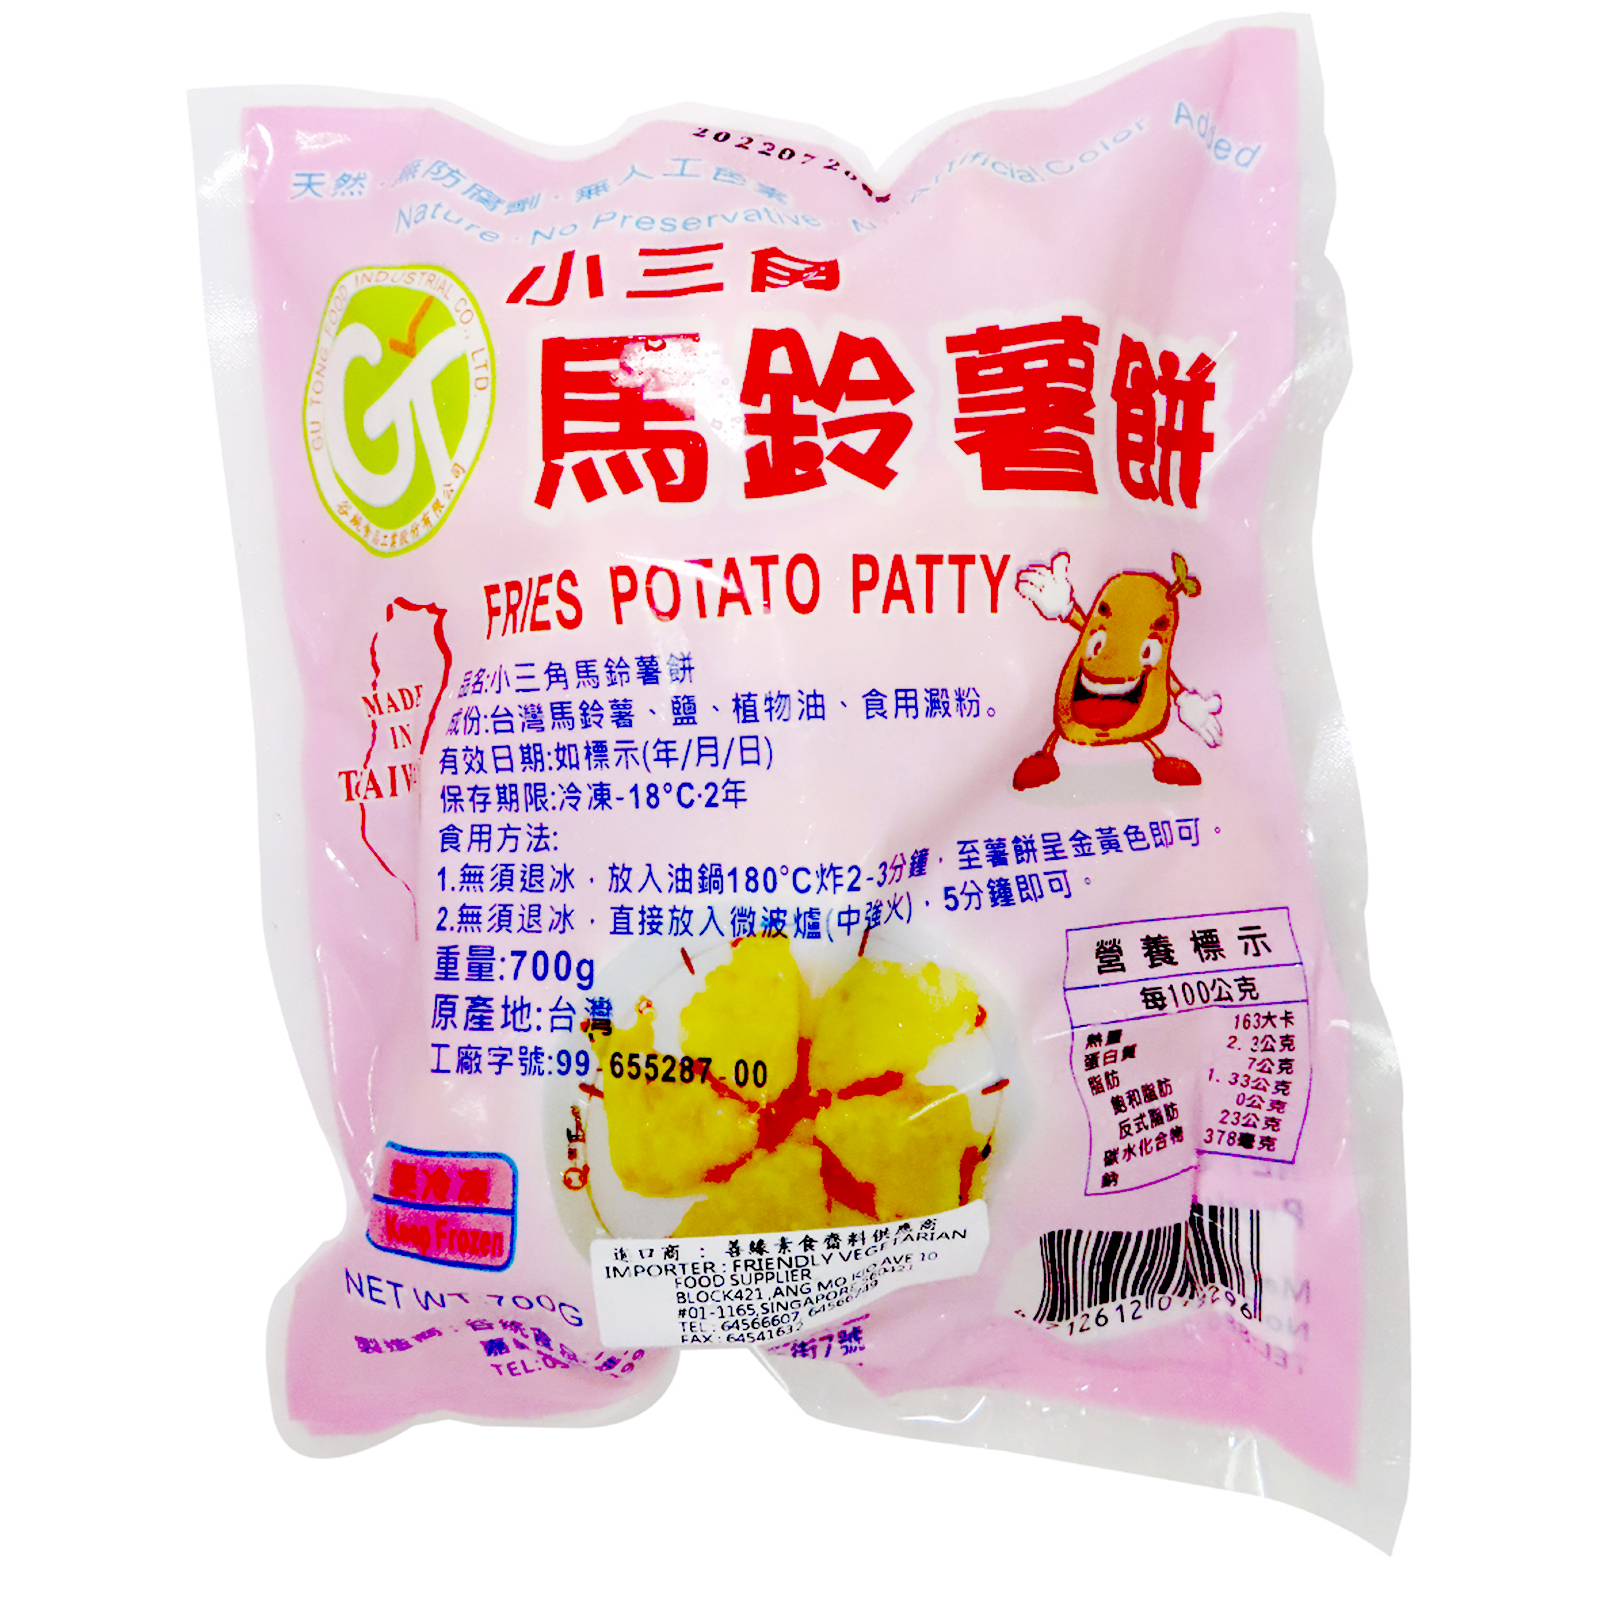 Image Fries Potato Patty hashbrown 谷统-小三角马铃薯饼 署片 700grams